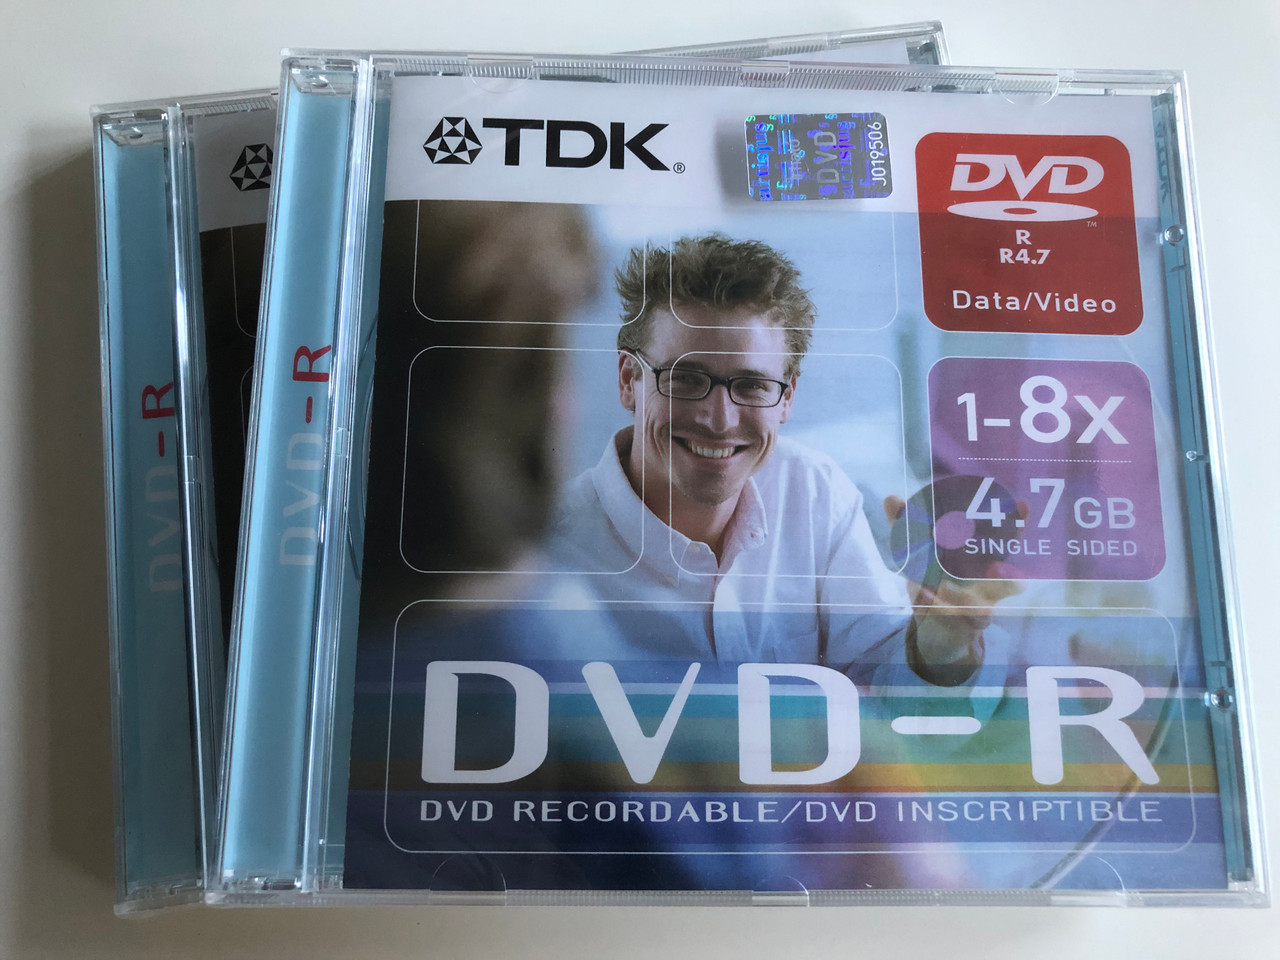 TDK DVD-R / Recordable - Inscriptible / R 4.7 Data / Video / 1-8x speed /  4.7 GB Single sided - bibleinmylanguage